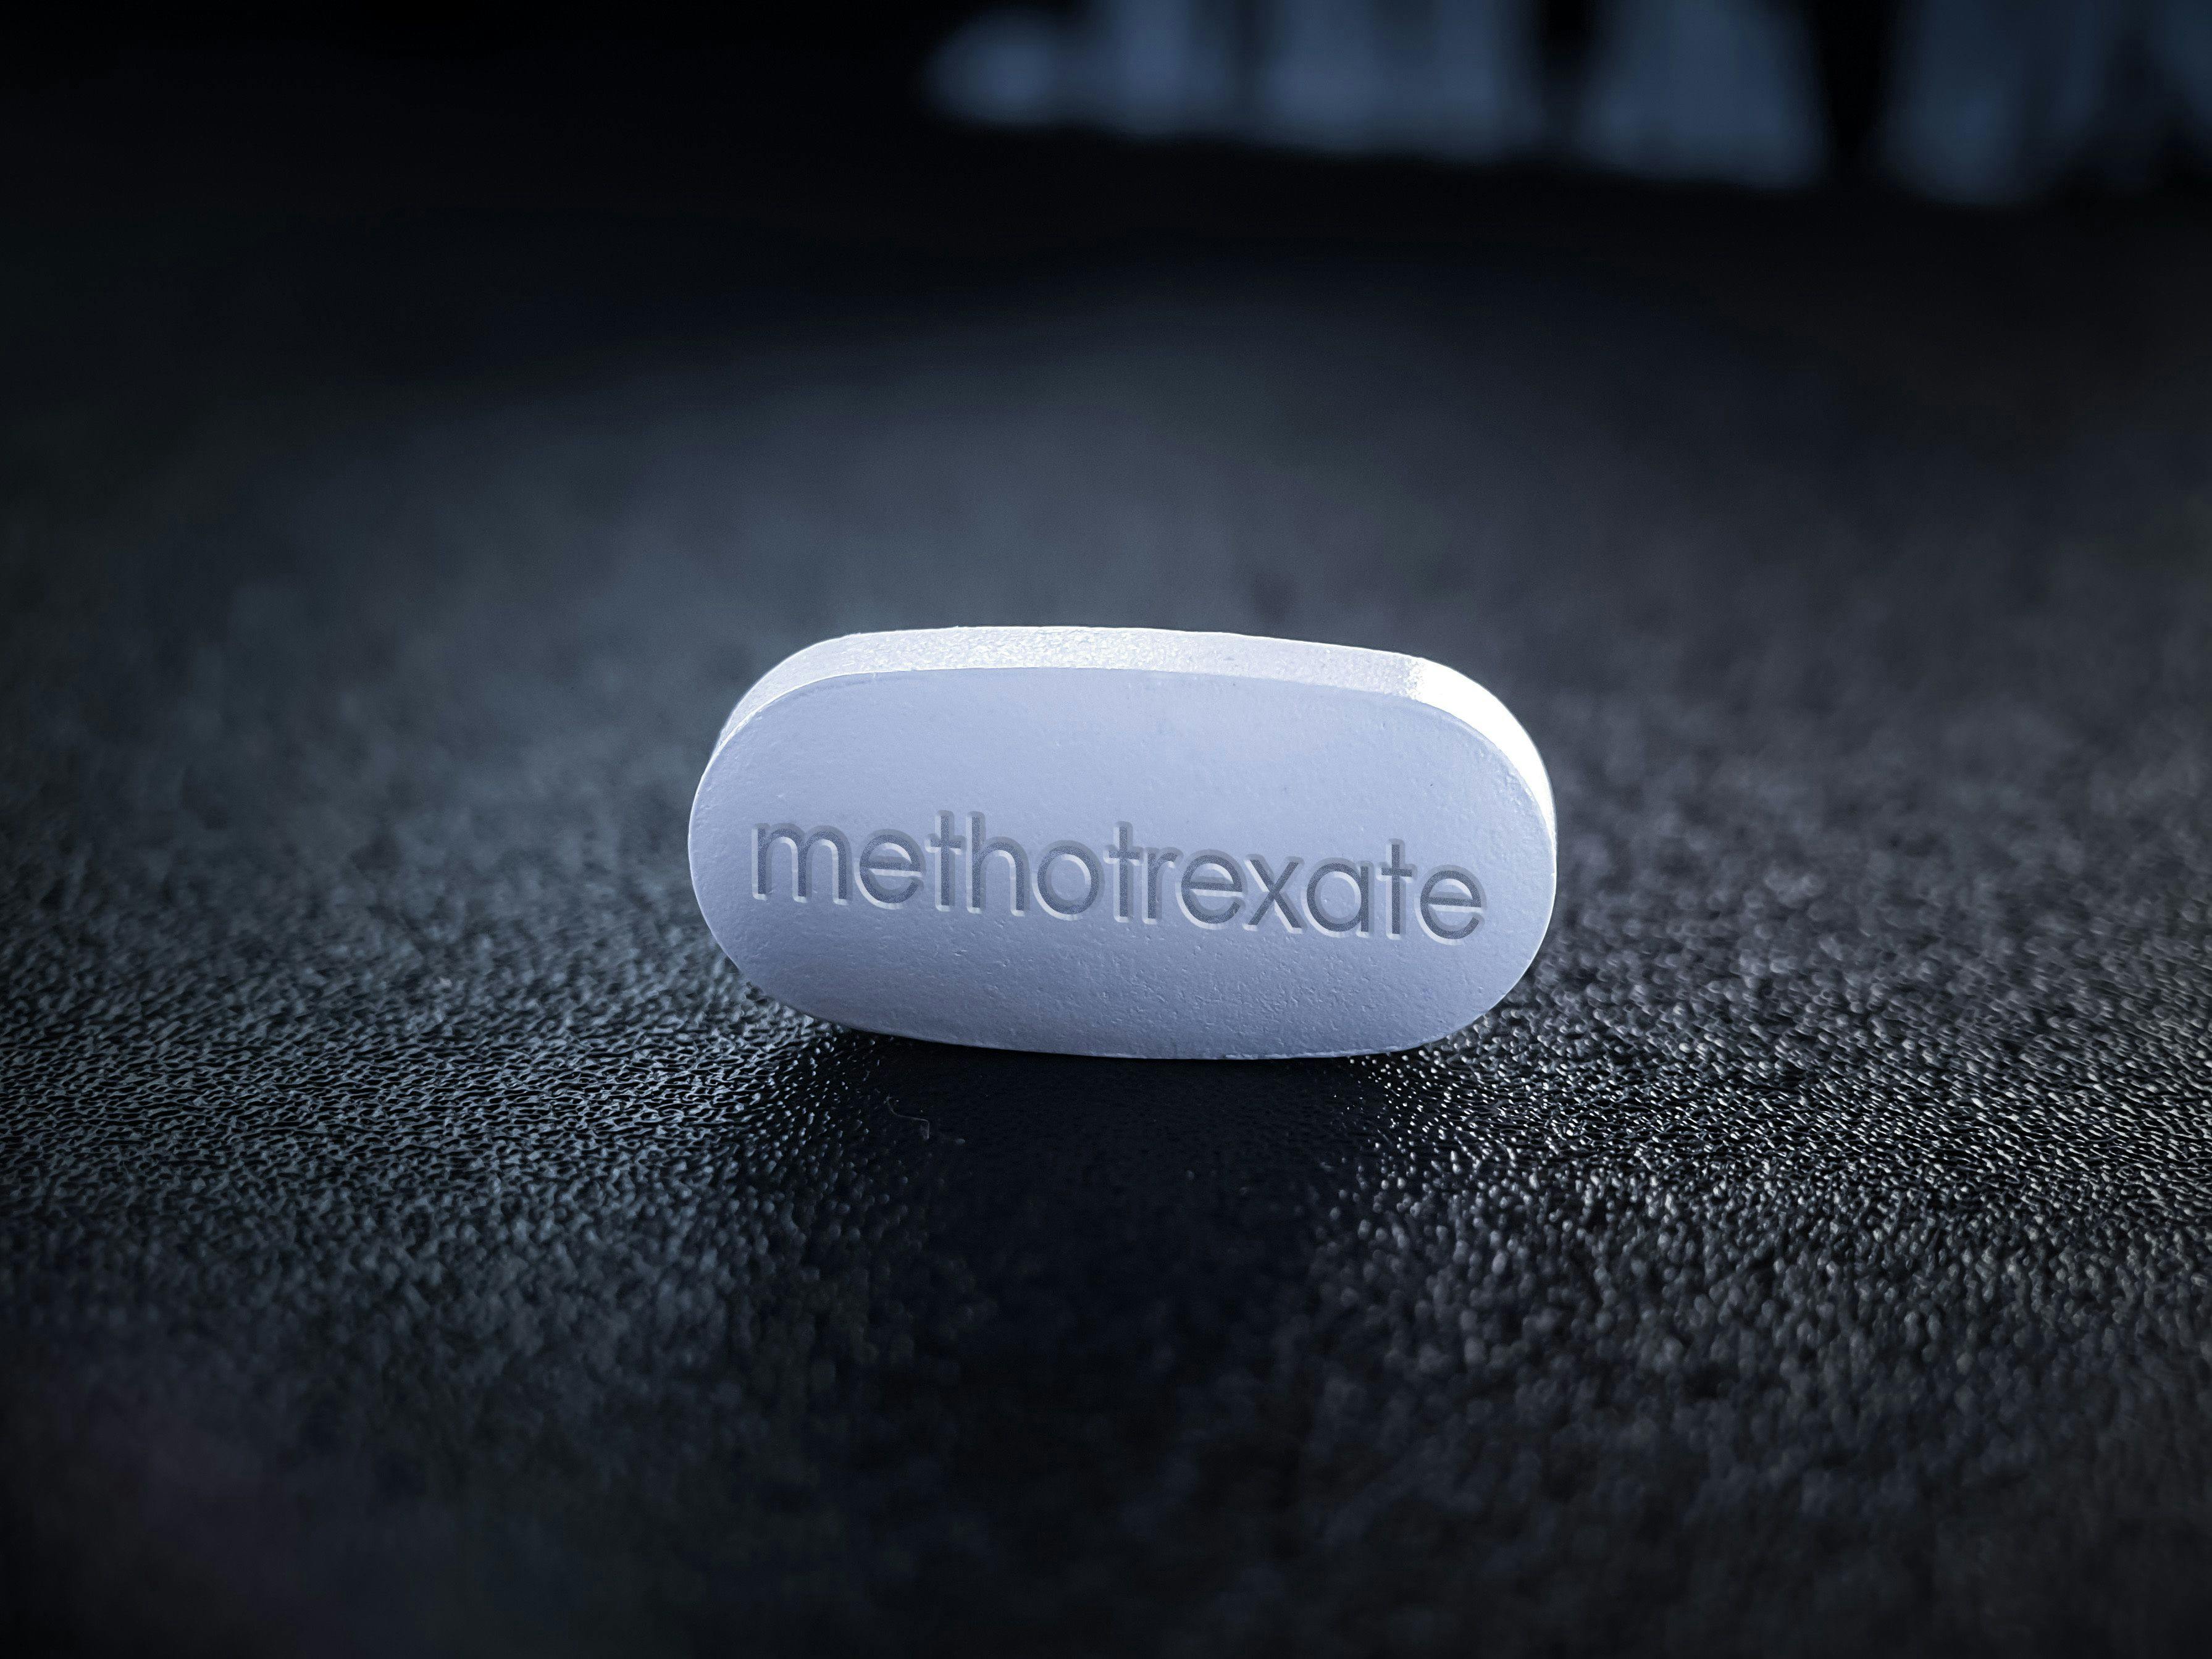 Methotrexate pill on black table - Image credit: Soni's | stock.adobe.com 